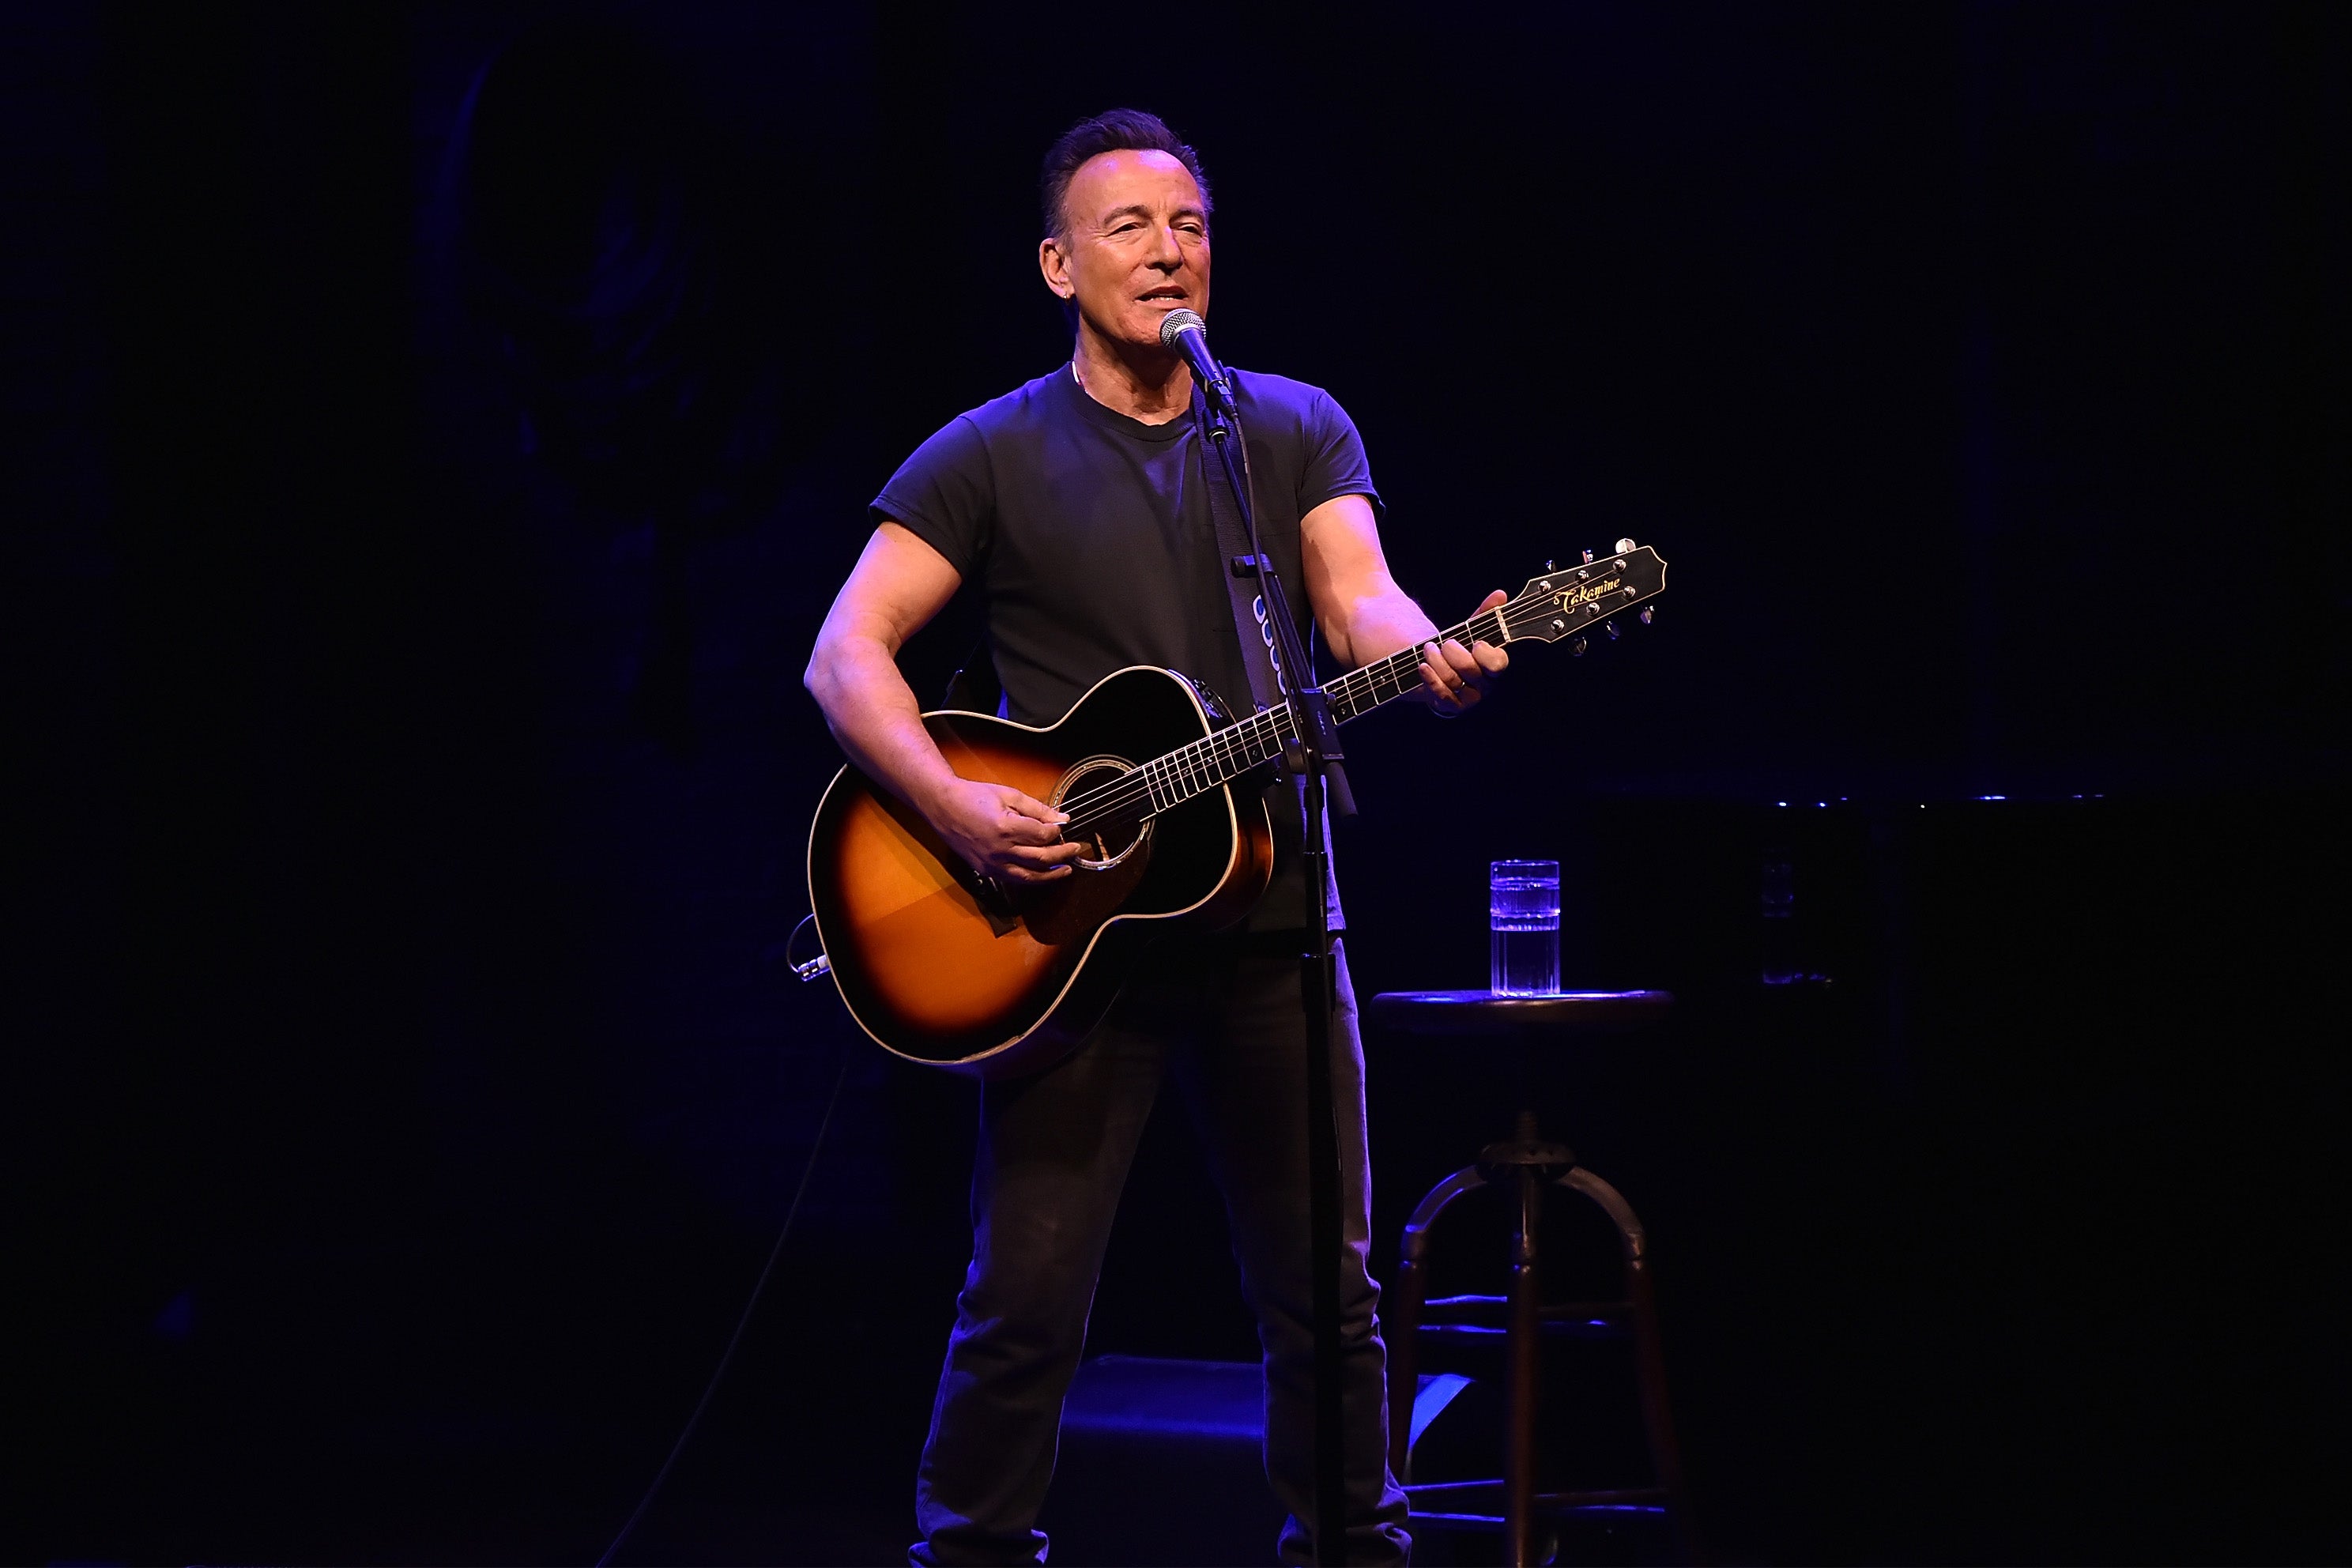 Bruce Springsteen, wearing all black, plays guitar and sings.